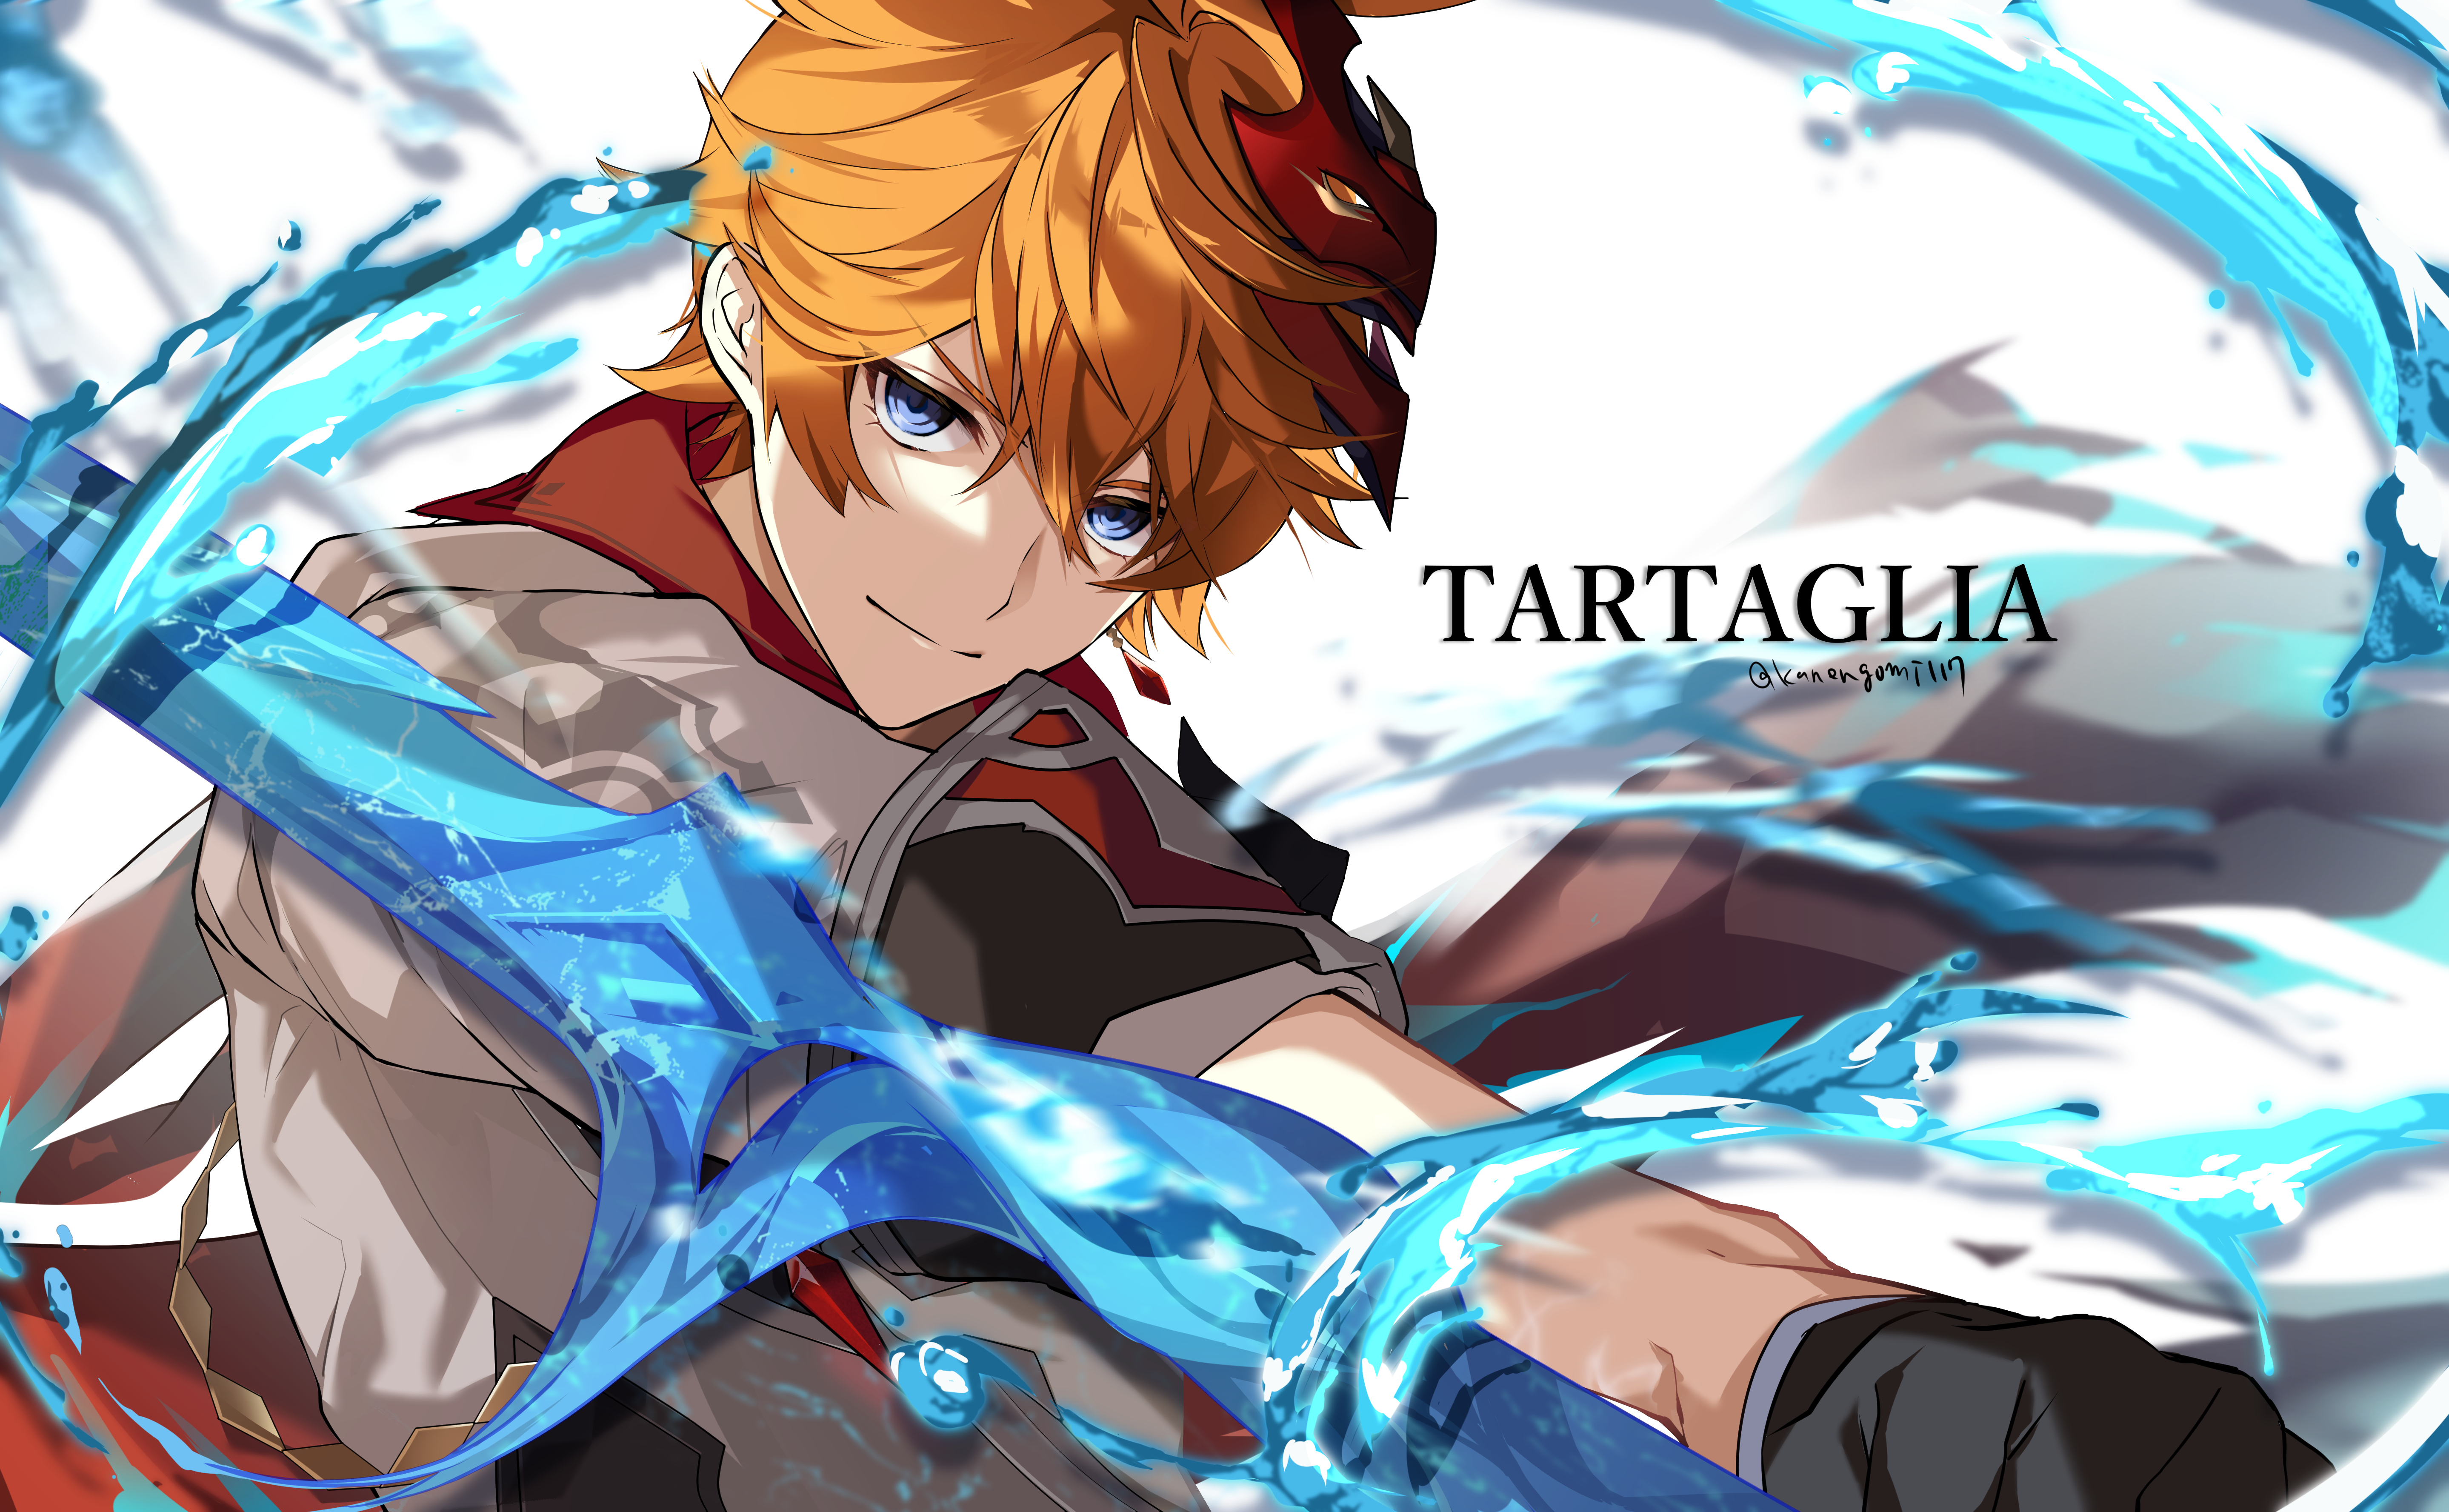 4K Tartaglia Childe (Genshin Impact) Wallpaper and Background Image